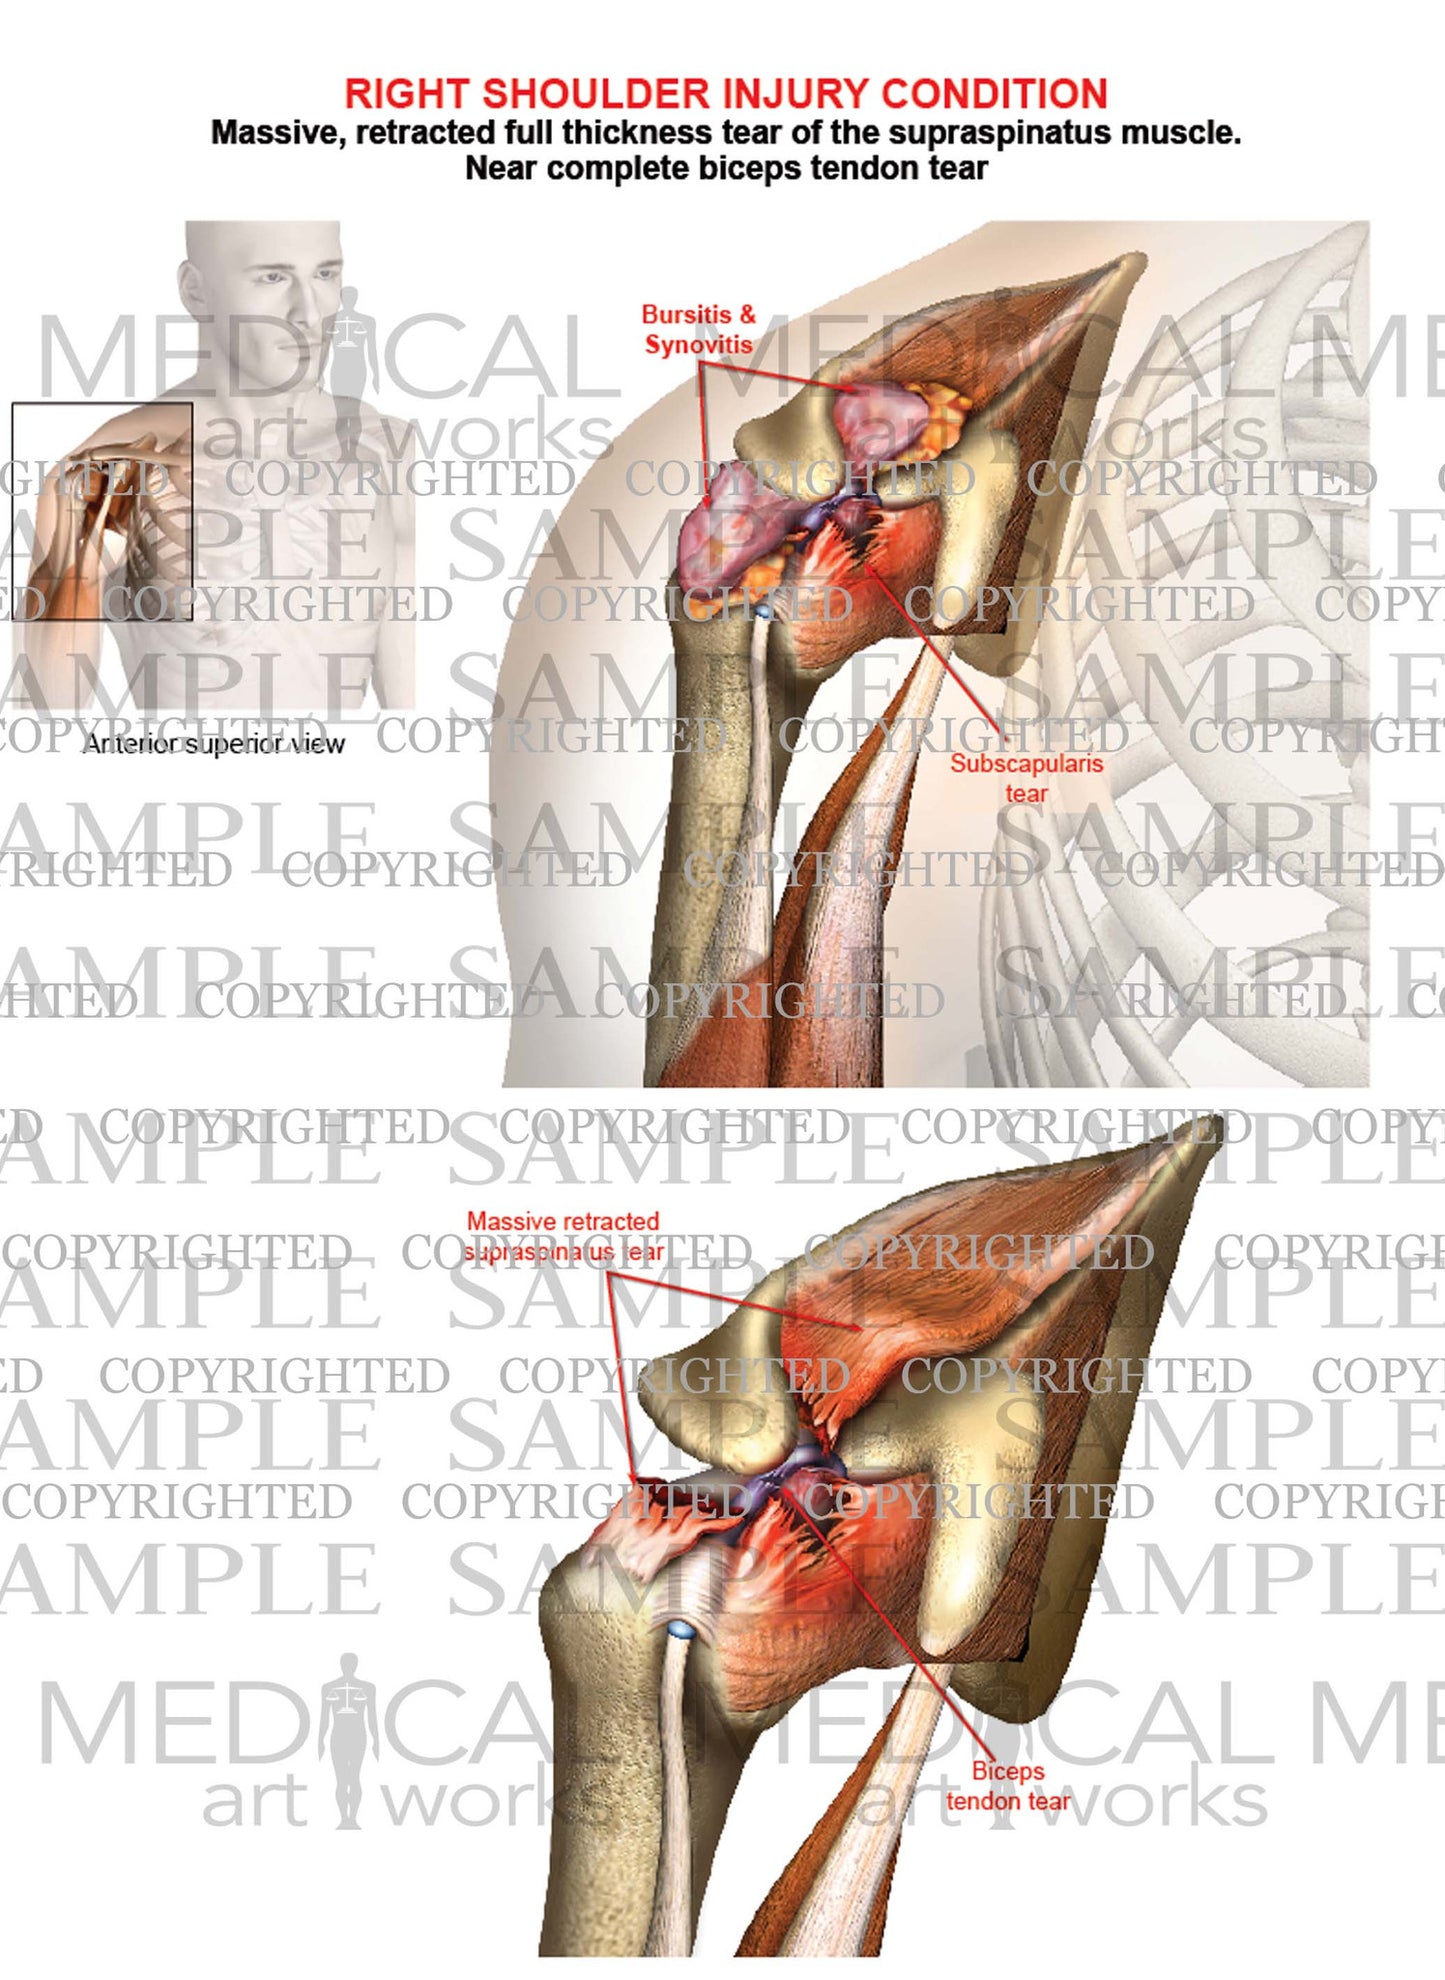 Right shoulder complete rotator cuff tear - Biceps tendon tear